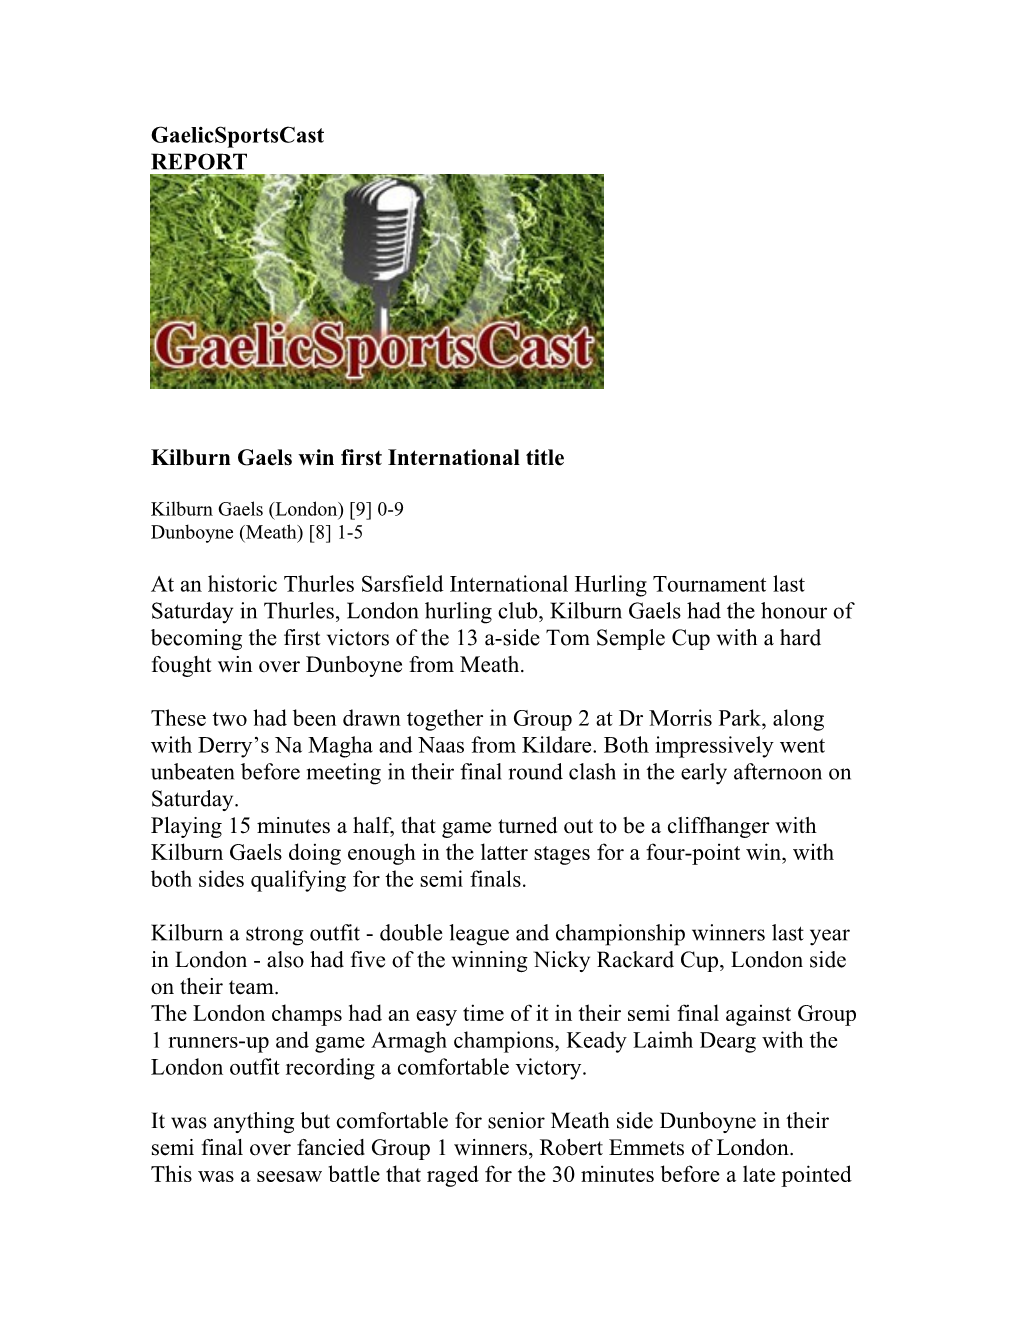 Kilburn Gaels Win First International Title